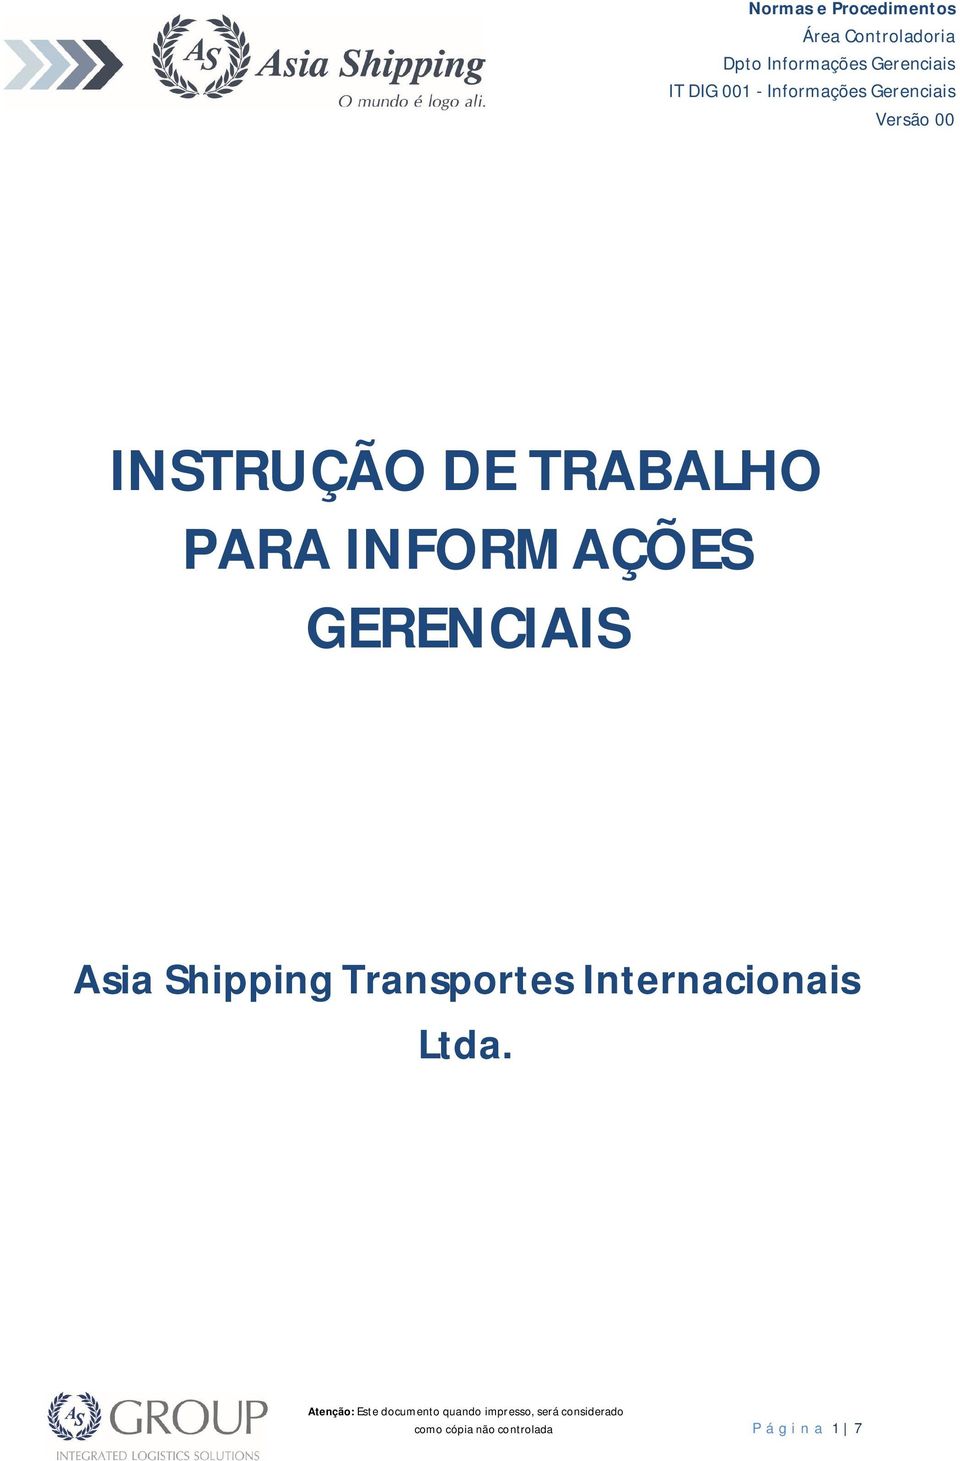 Shipping Transportes